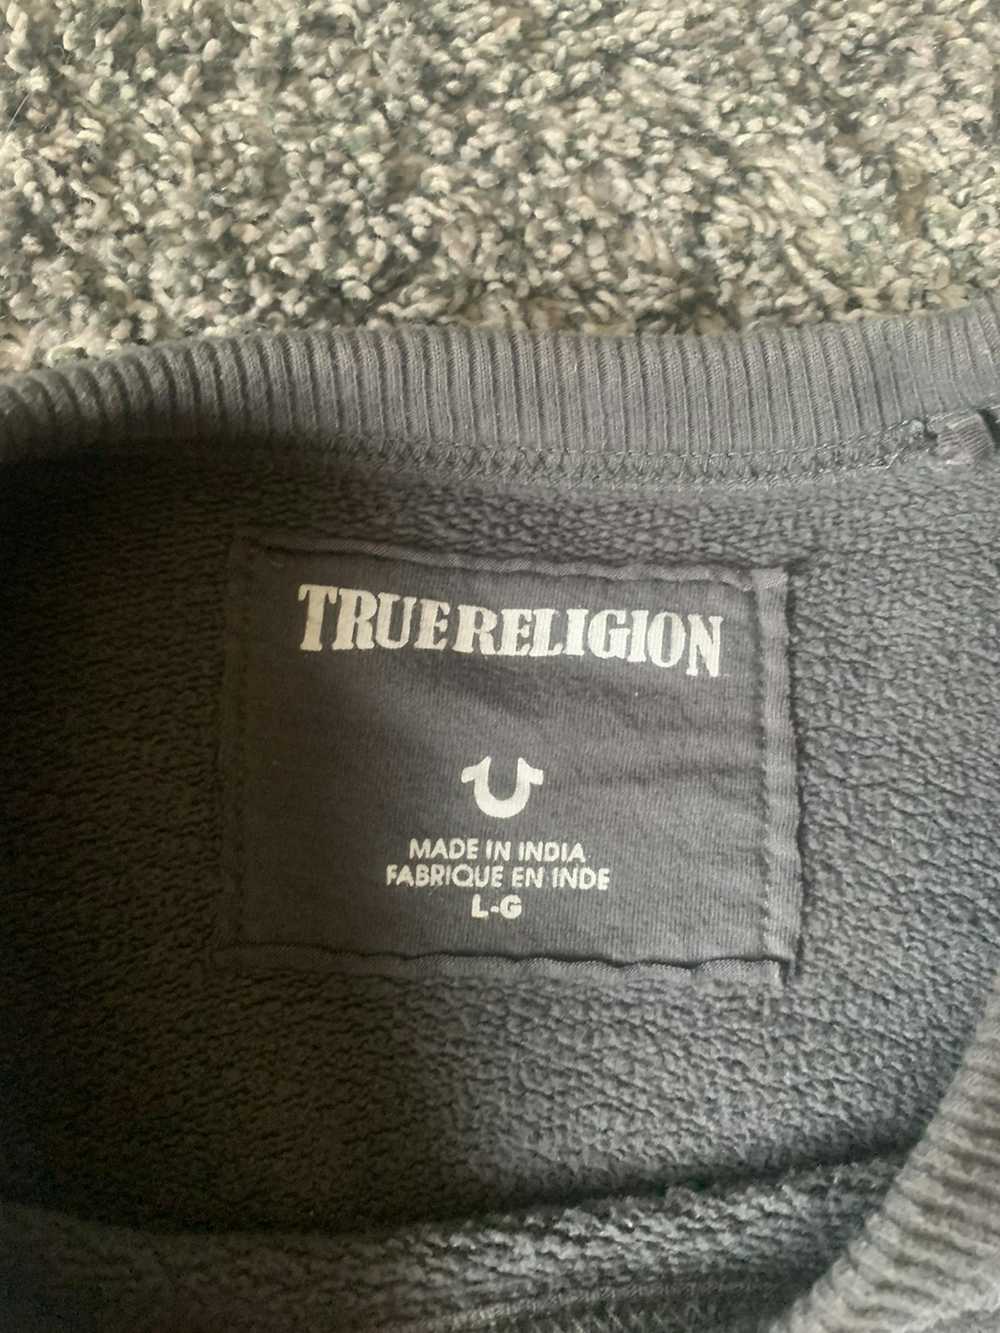 True Religion true religion button crewneck - image 3